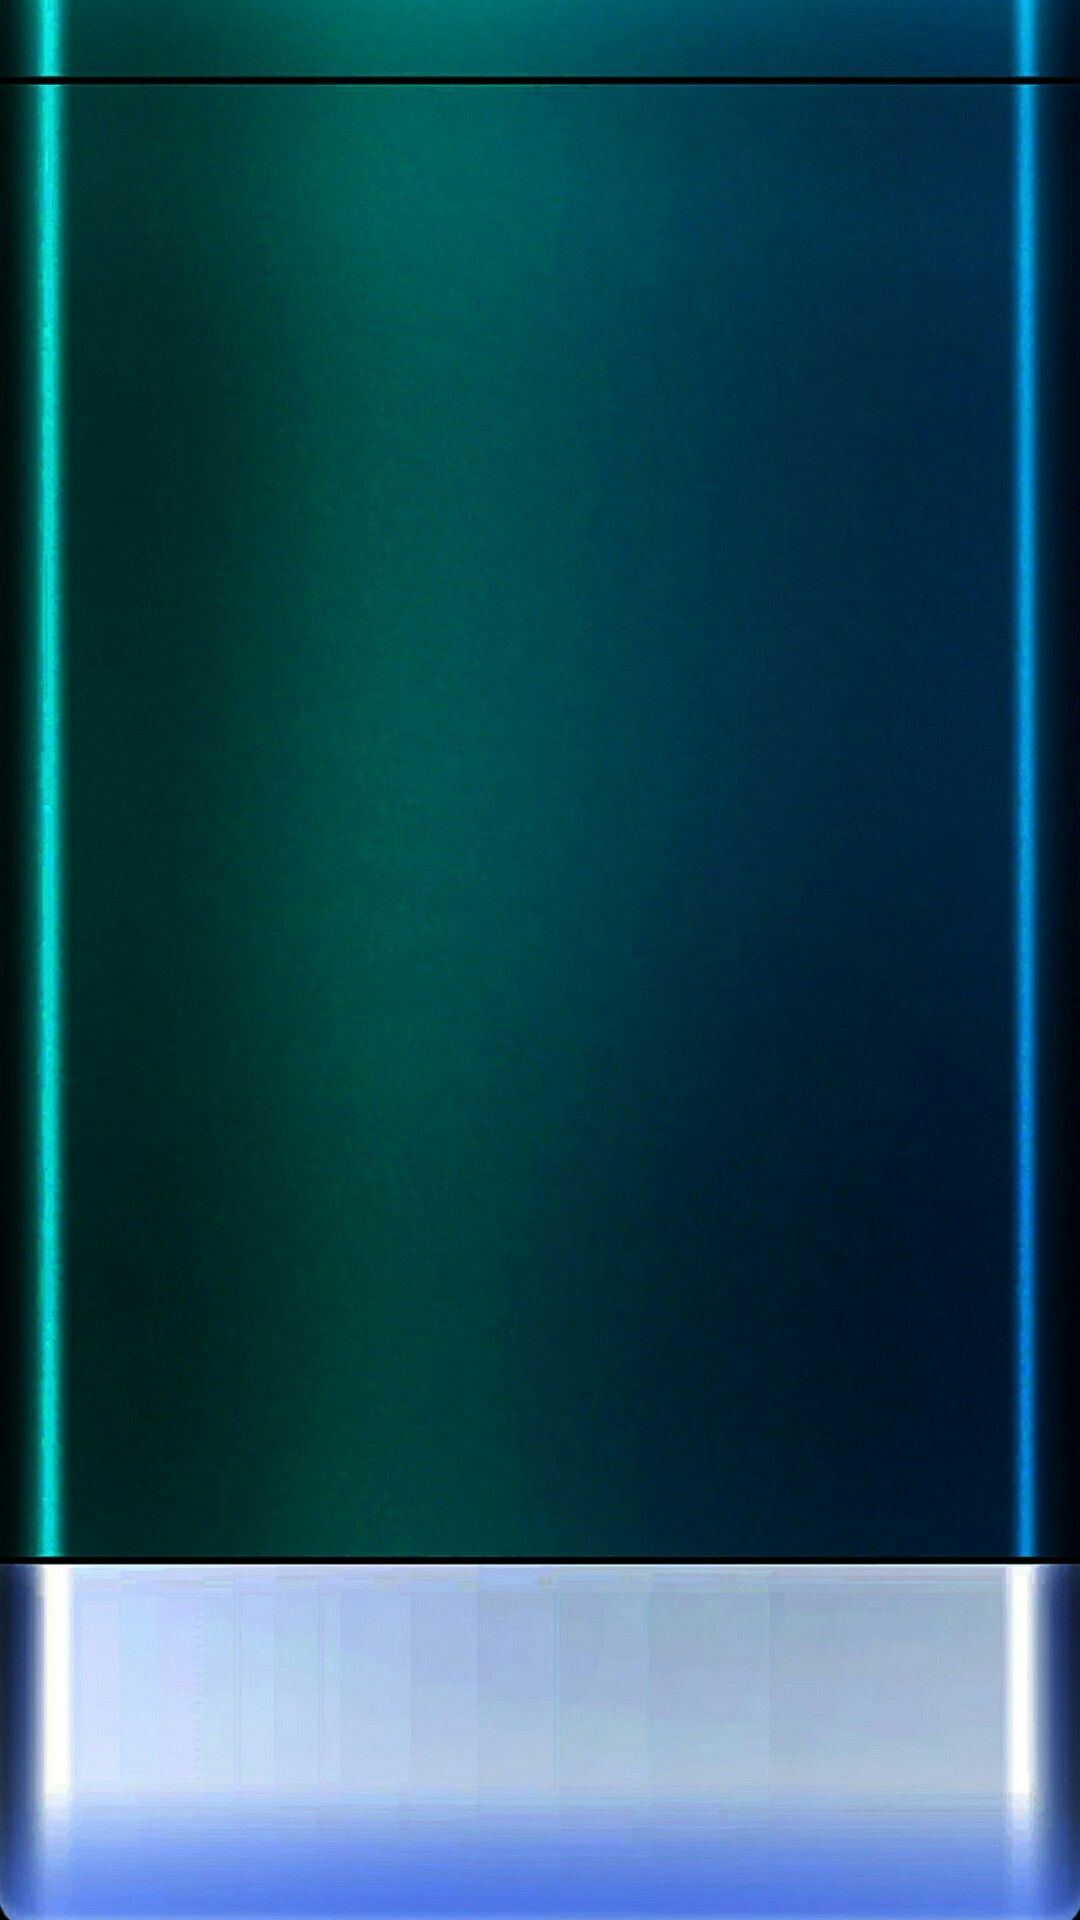 edge screen wallpaper,blue,green,aqua,azure,turquoise